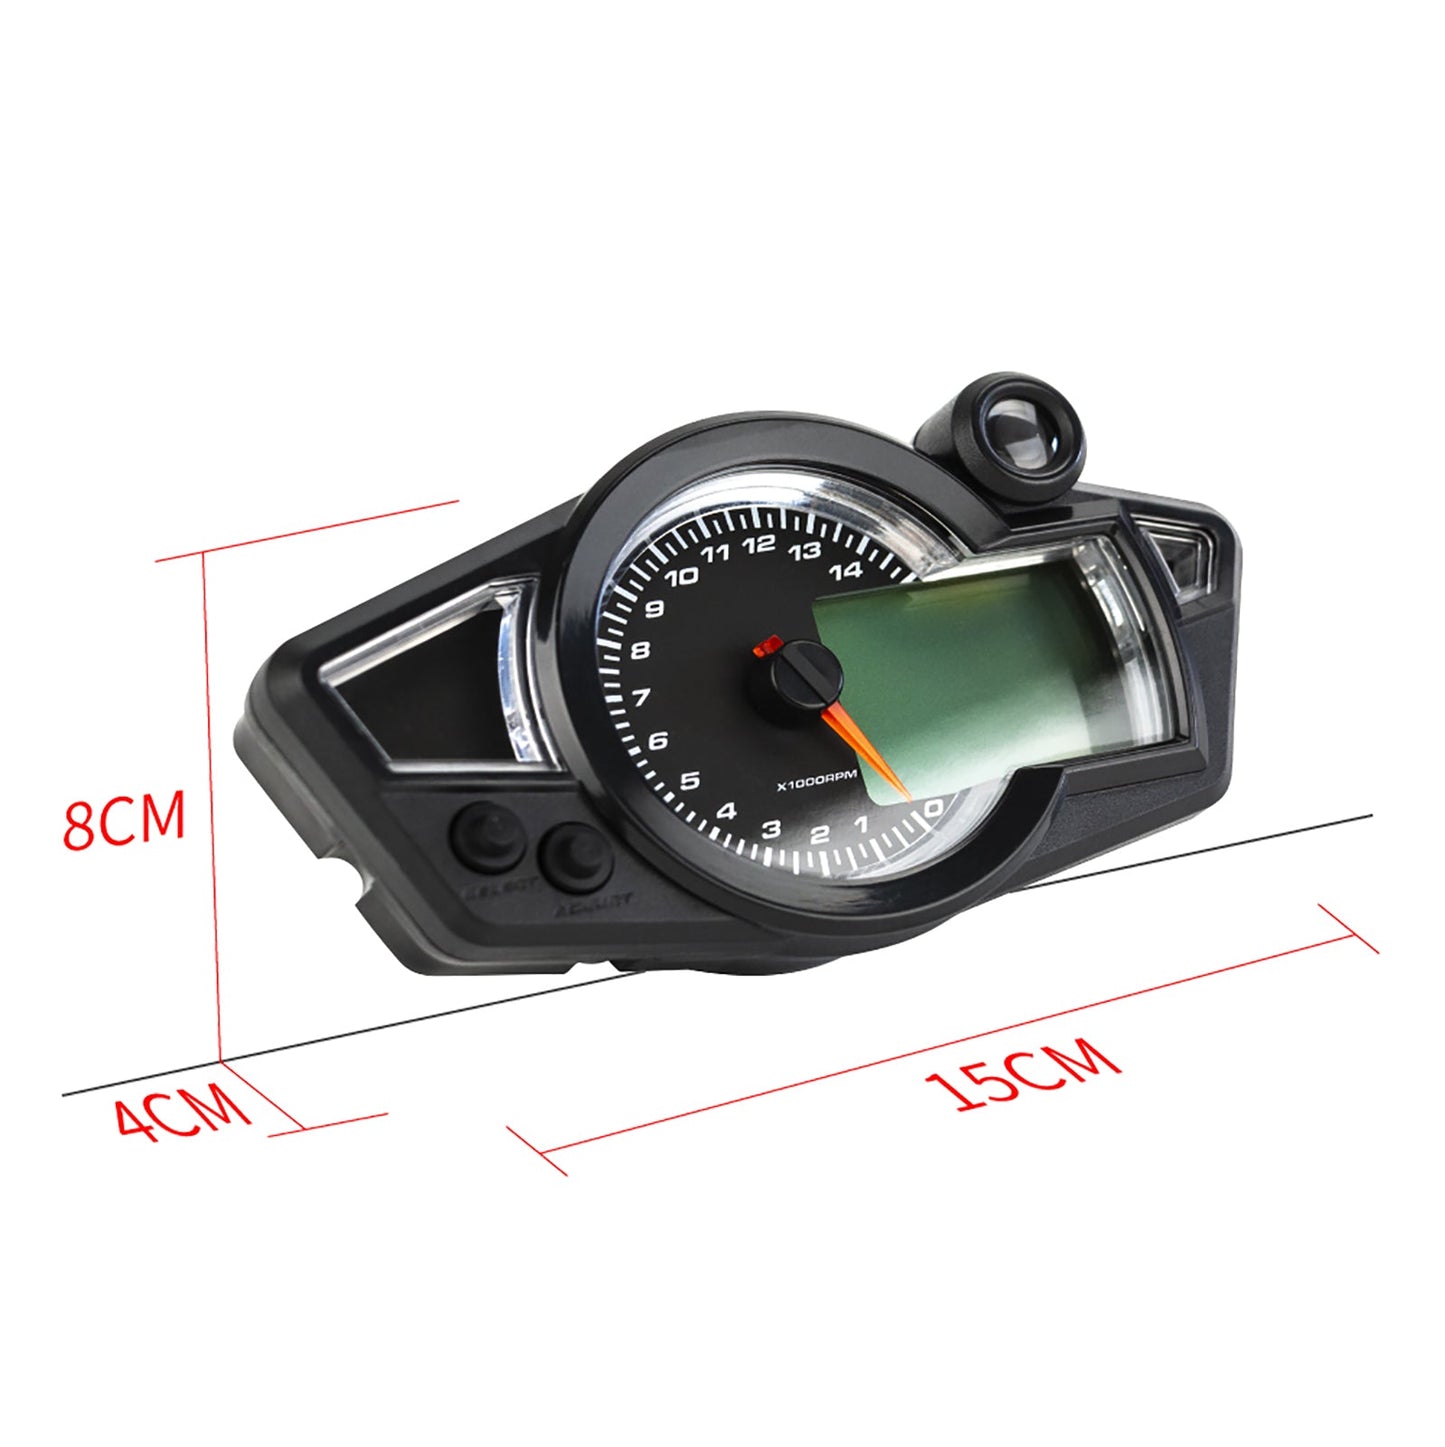 Tft Digital Speedometer Universal Motorcycle 14000Rpm Gear Backlight Odometer